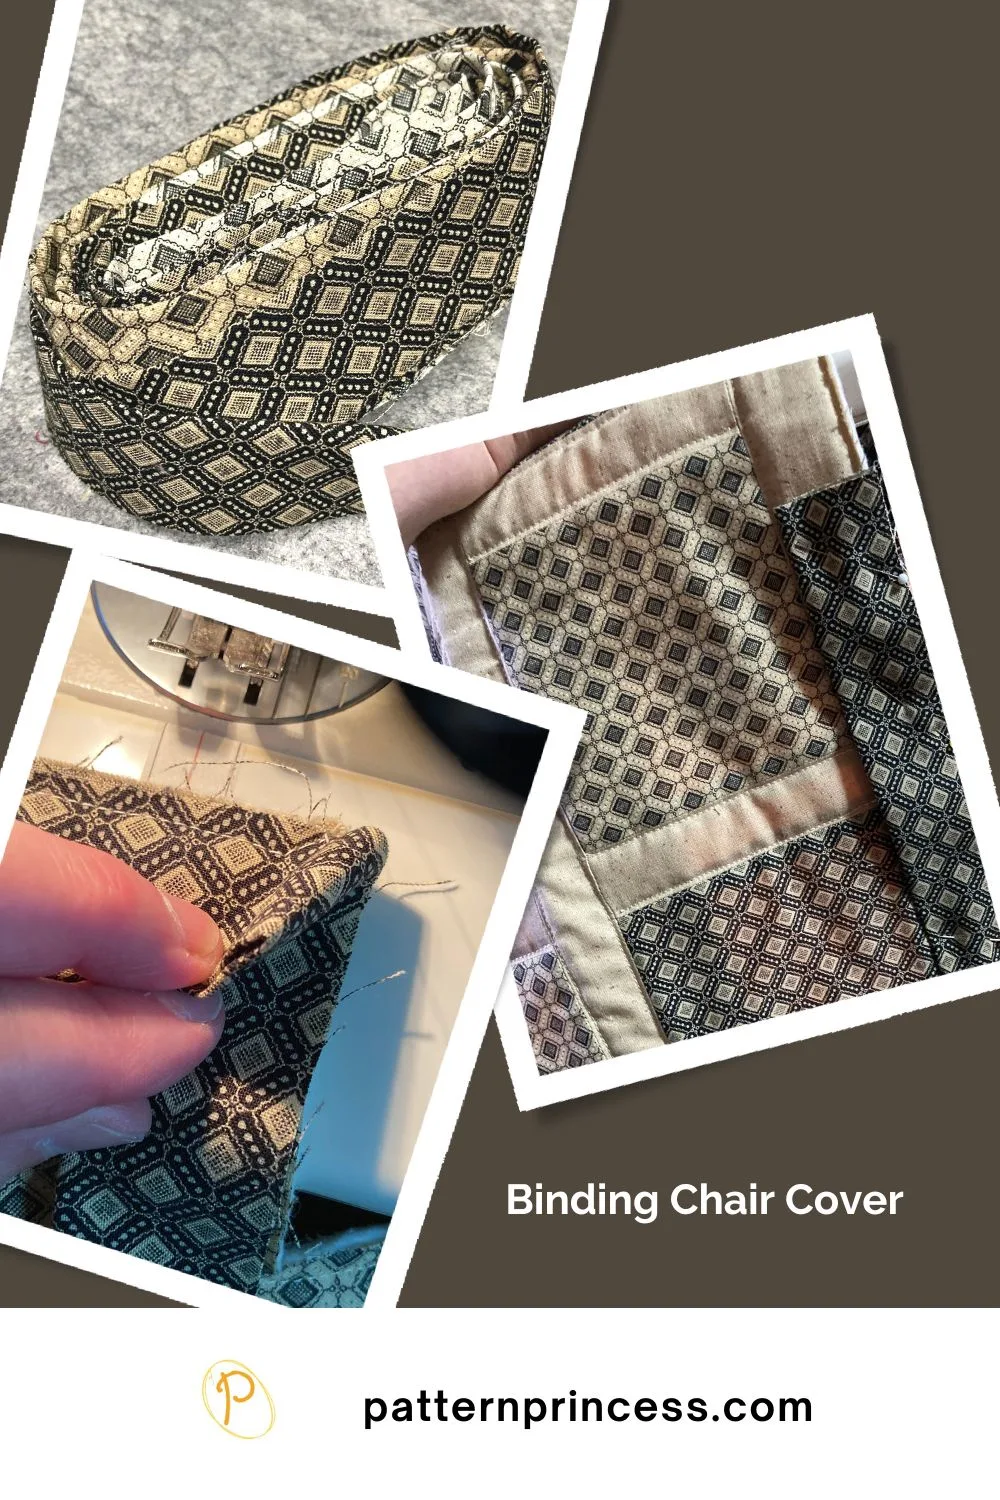 Binding Chair Cover